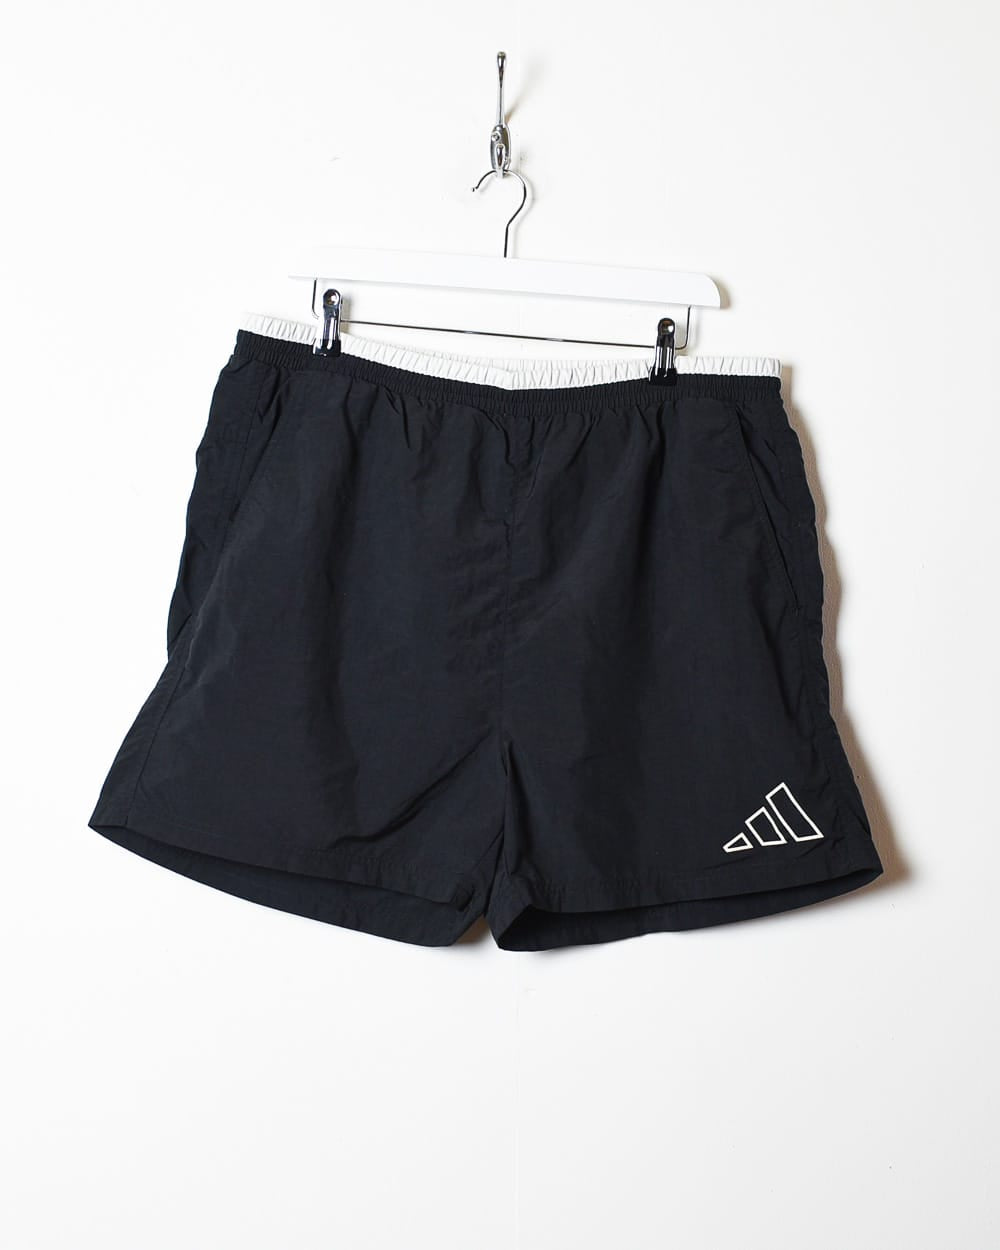 Black Adidas Mesh Shorts - X-Large